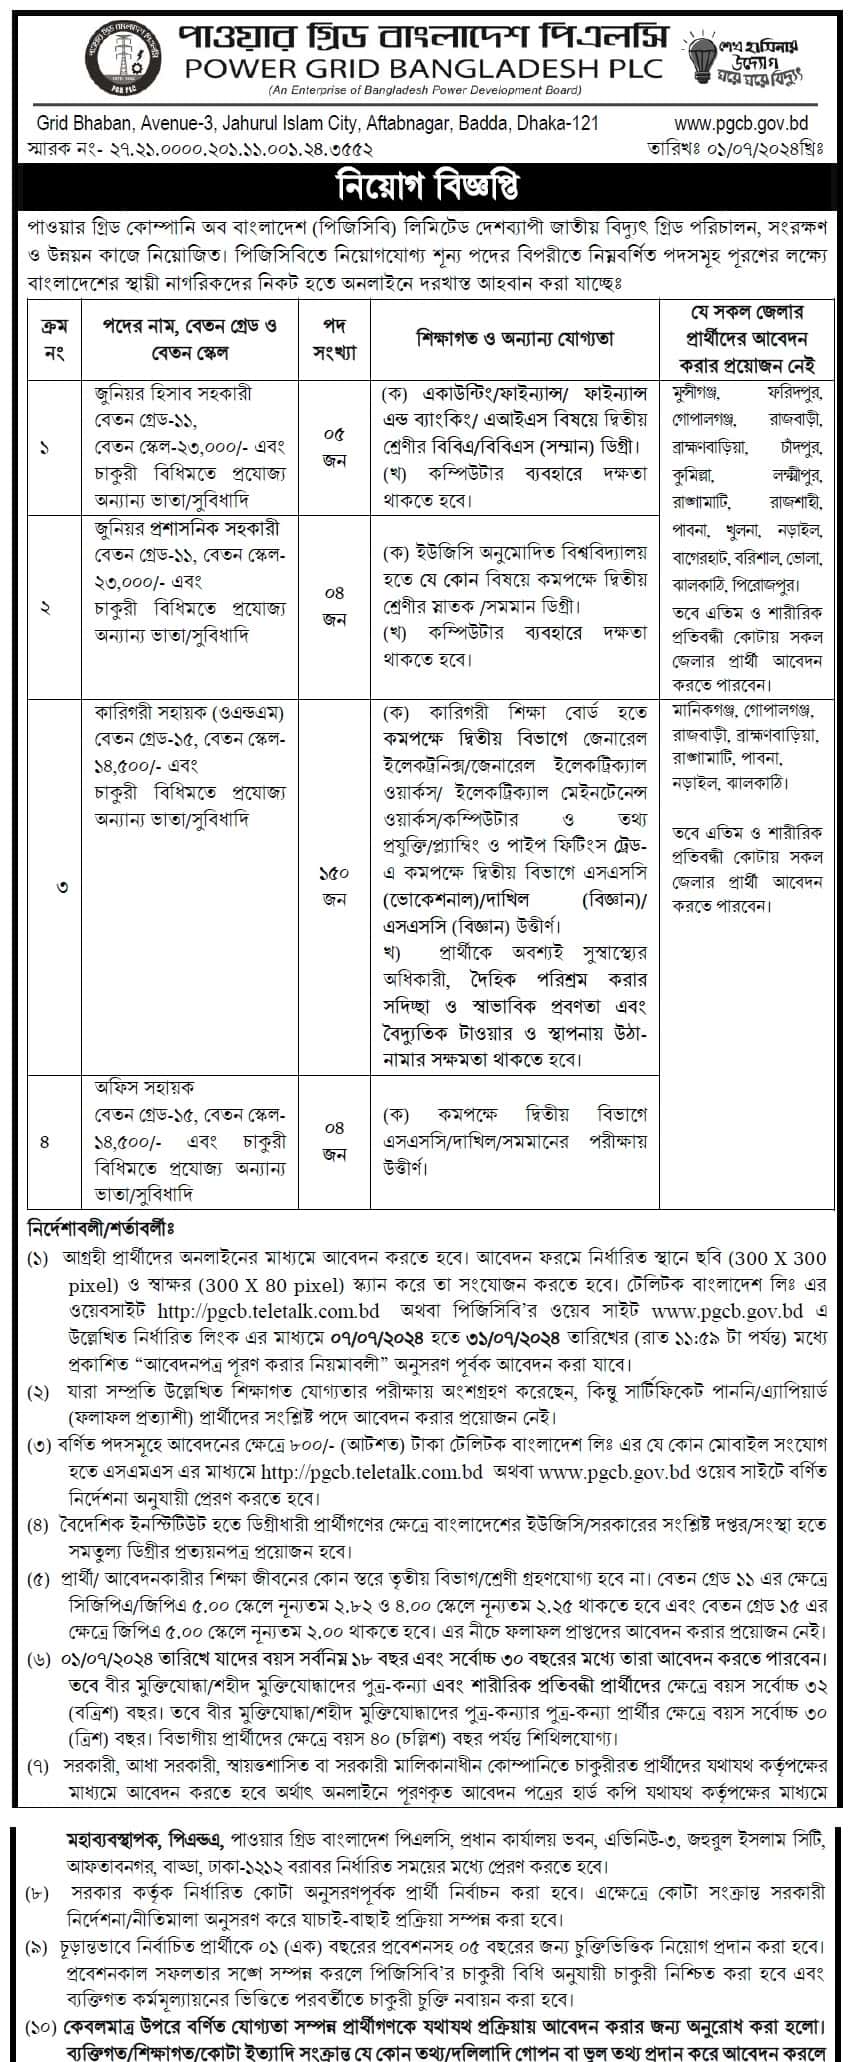 Power Grid Company of Bangladesh Job Circular